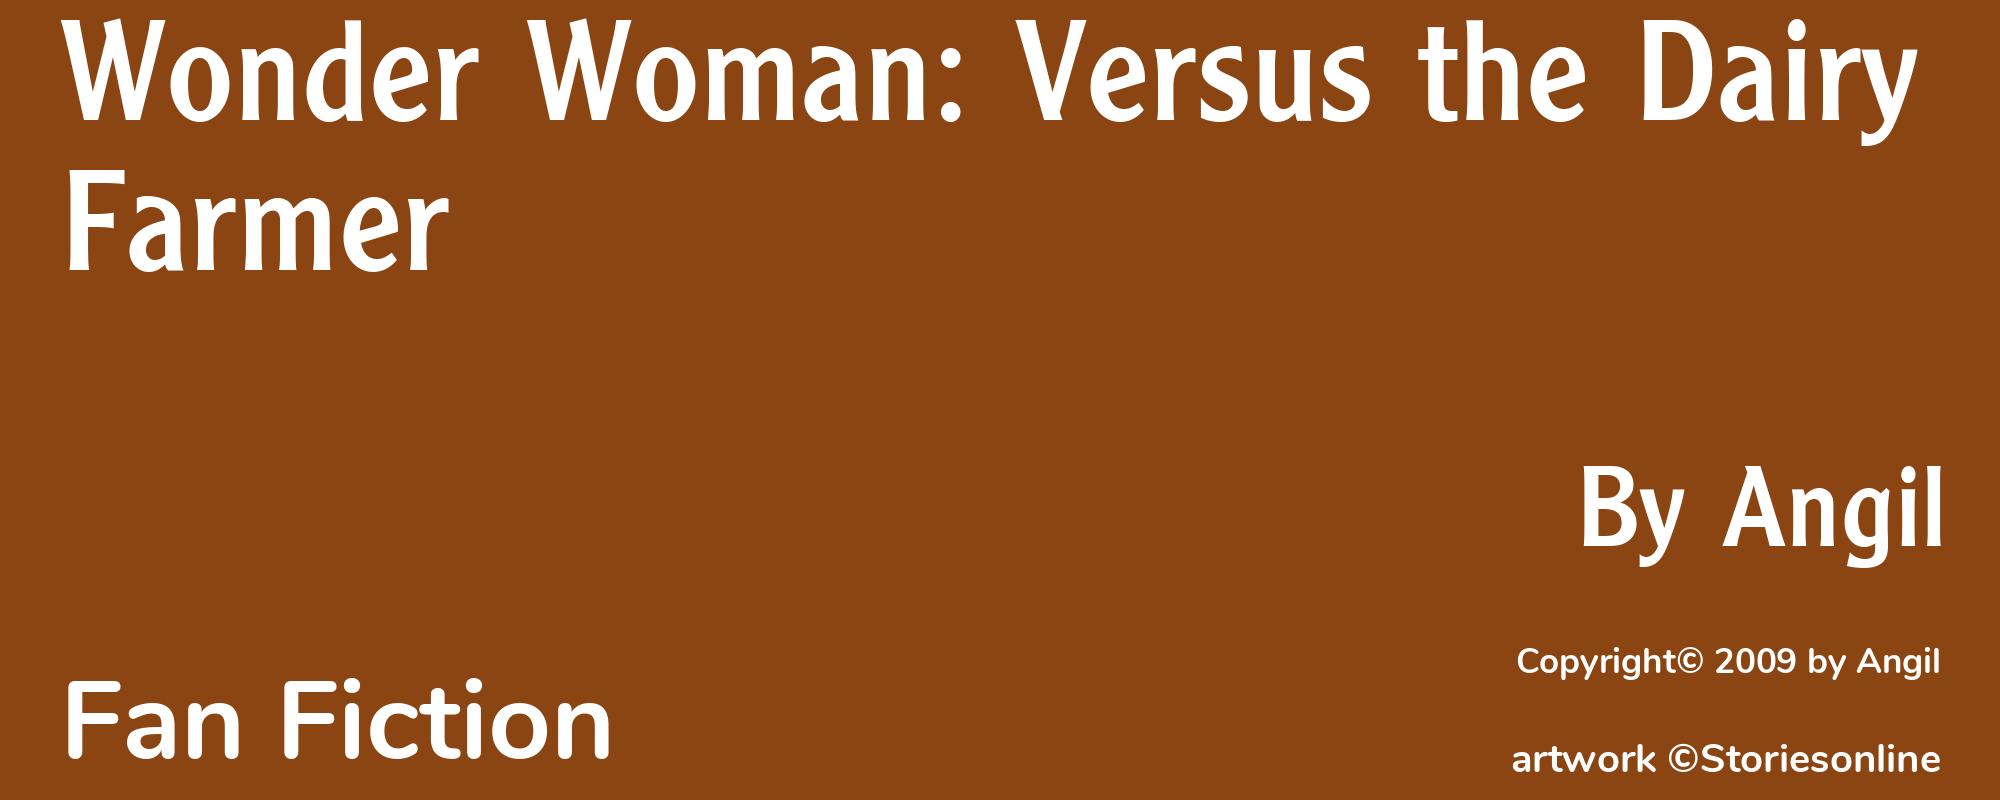 Wonder Woman: Versus the Dairy Farmer - Cover